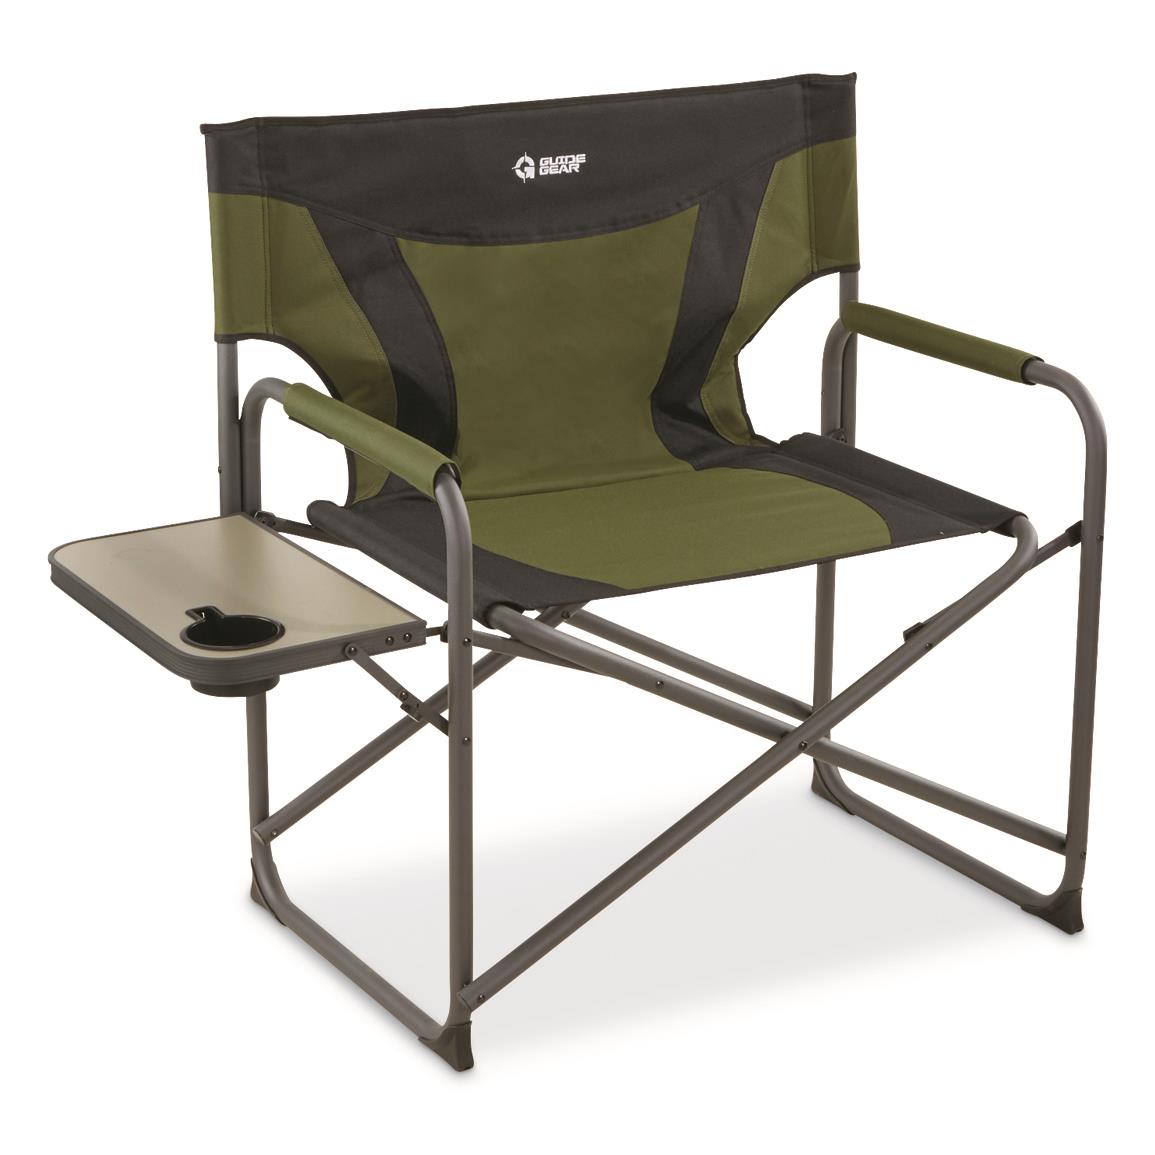 Guide Gear Oversized XXL Director's Chair, 600-lb. Capacity, Green/Black, Hunter Green/Black